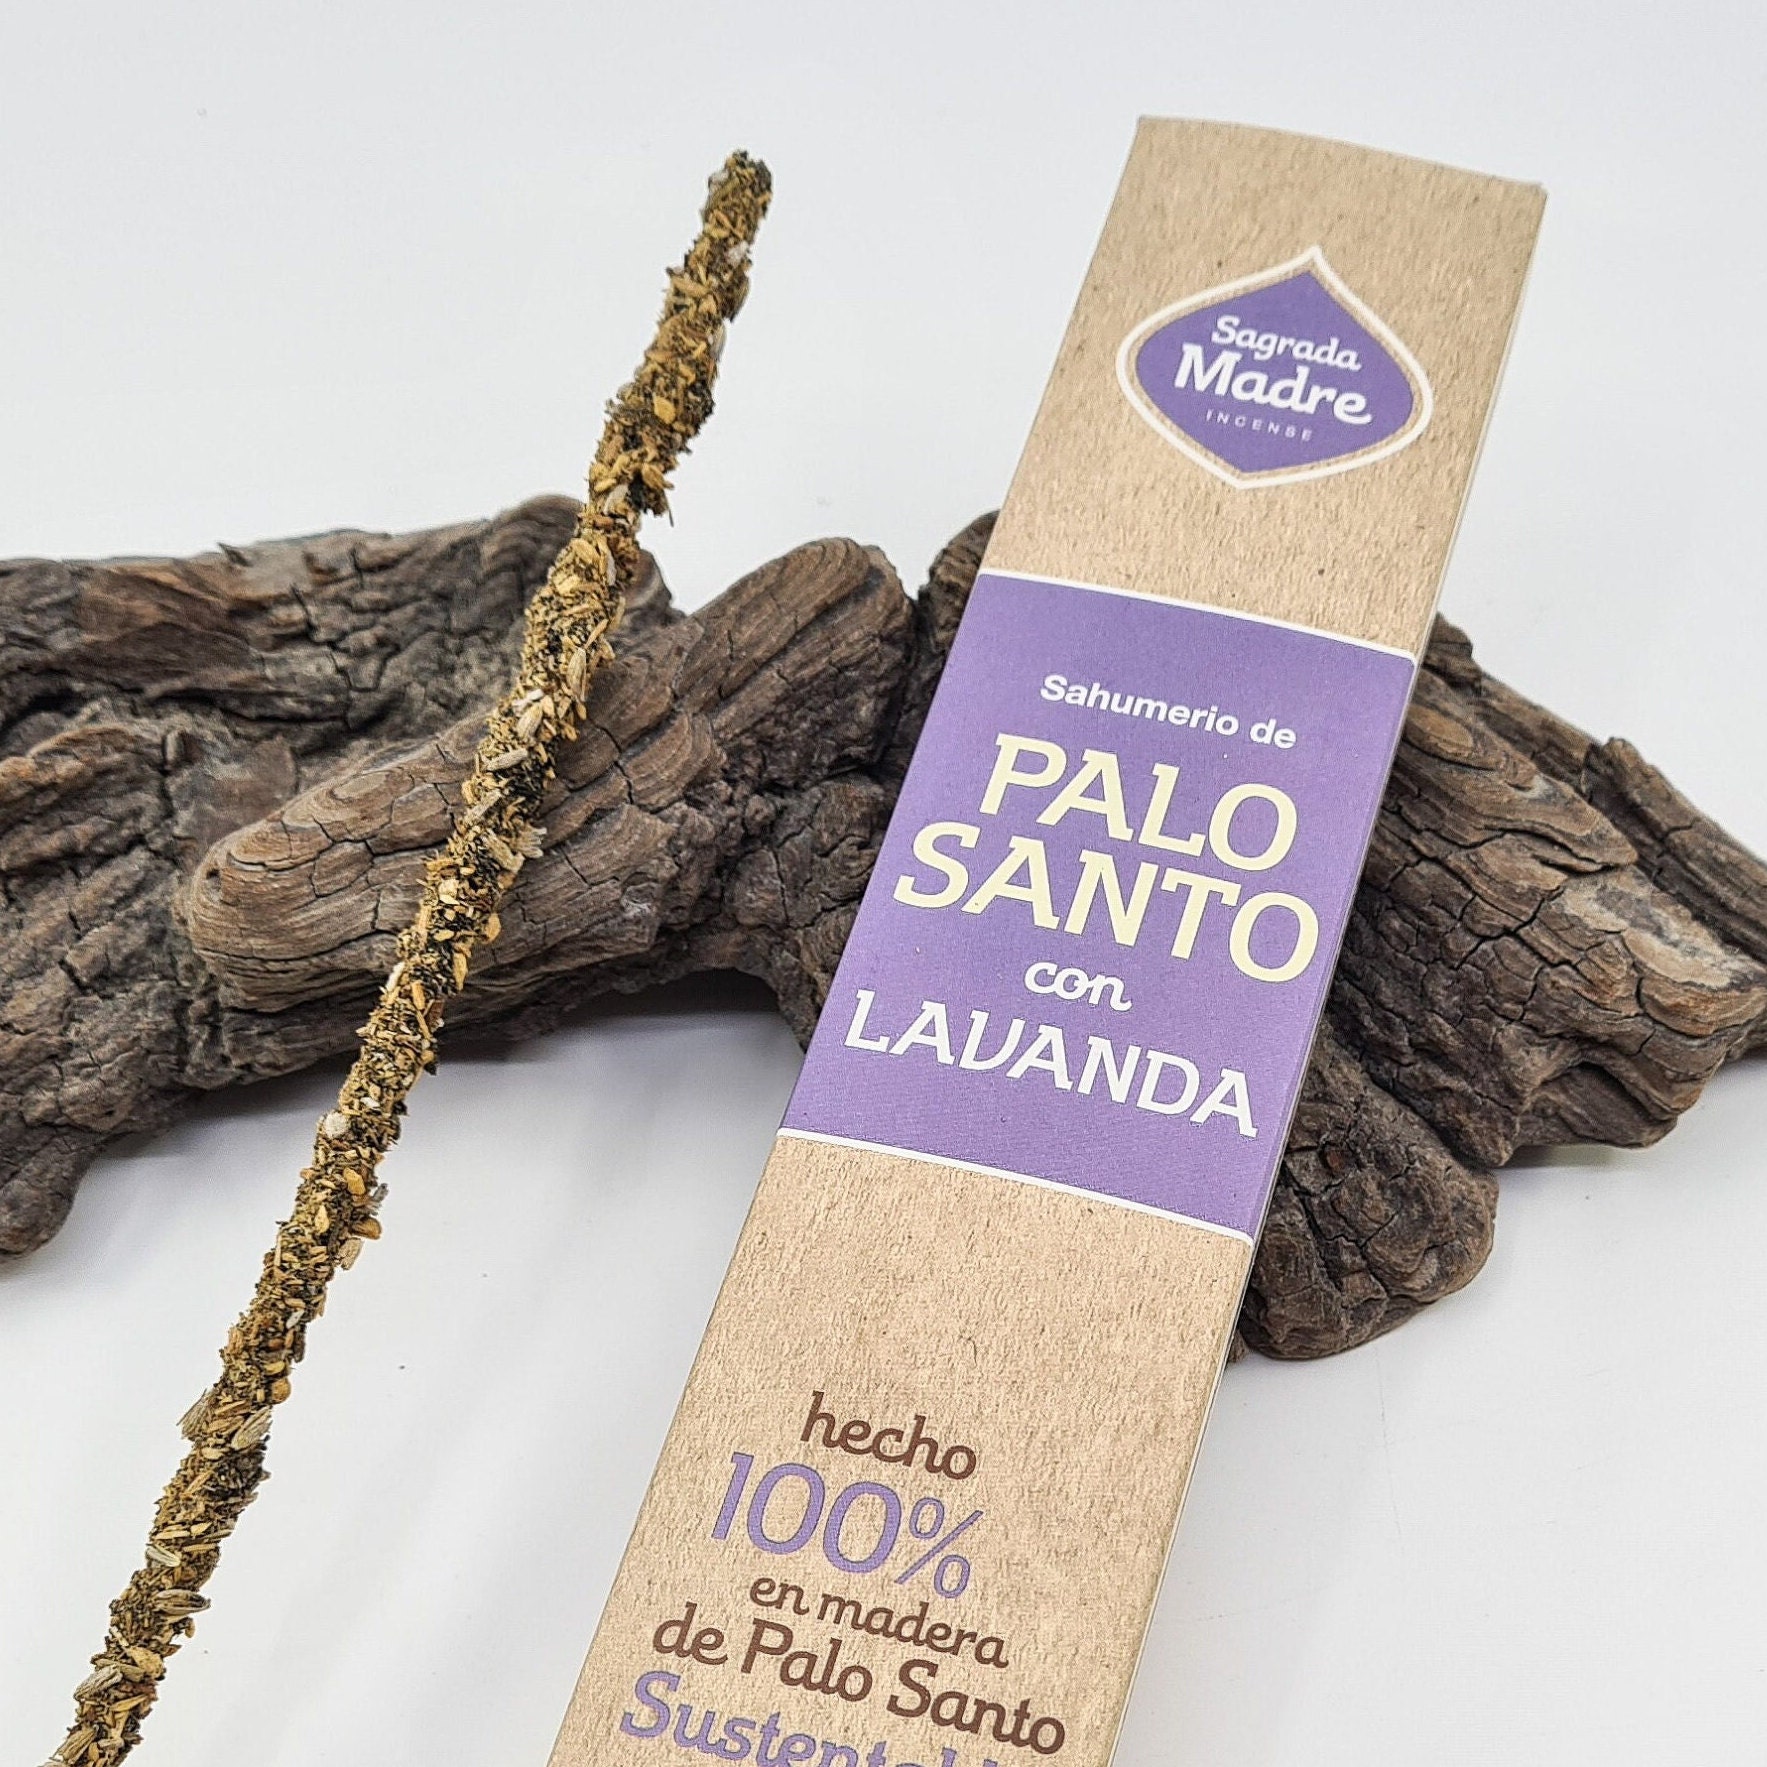 Sahumerio Sagrada Madre Natural - COPAL - Sweet Sensation